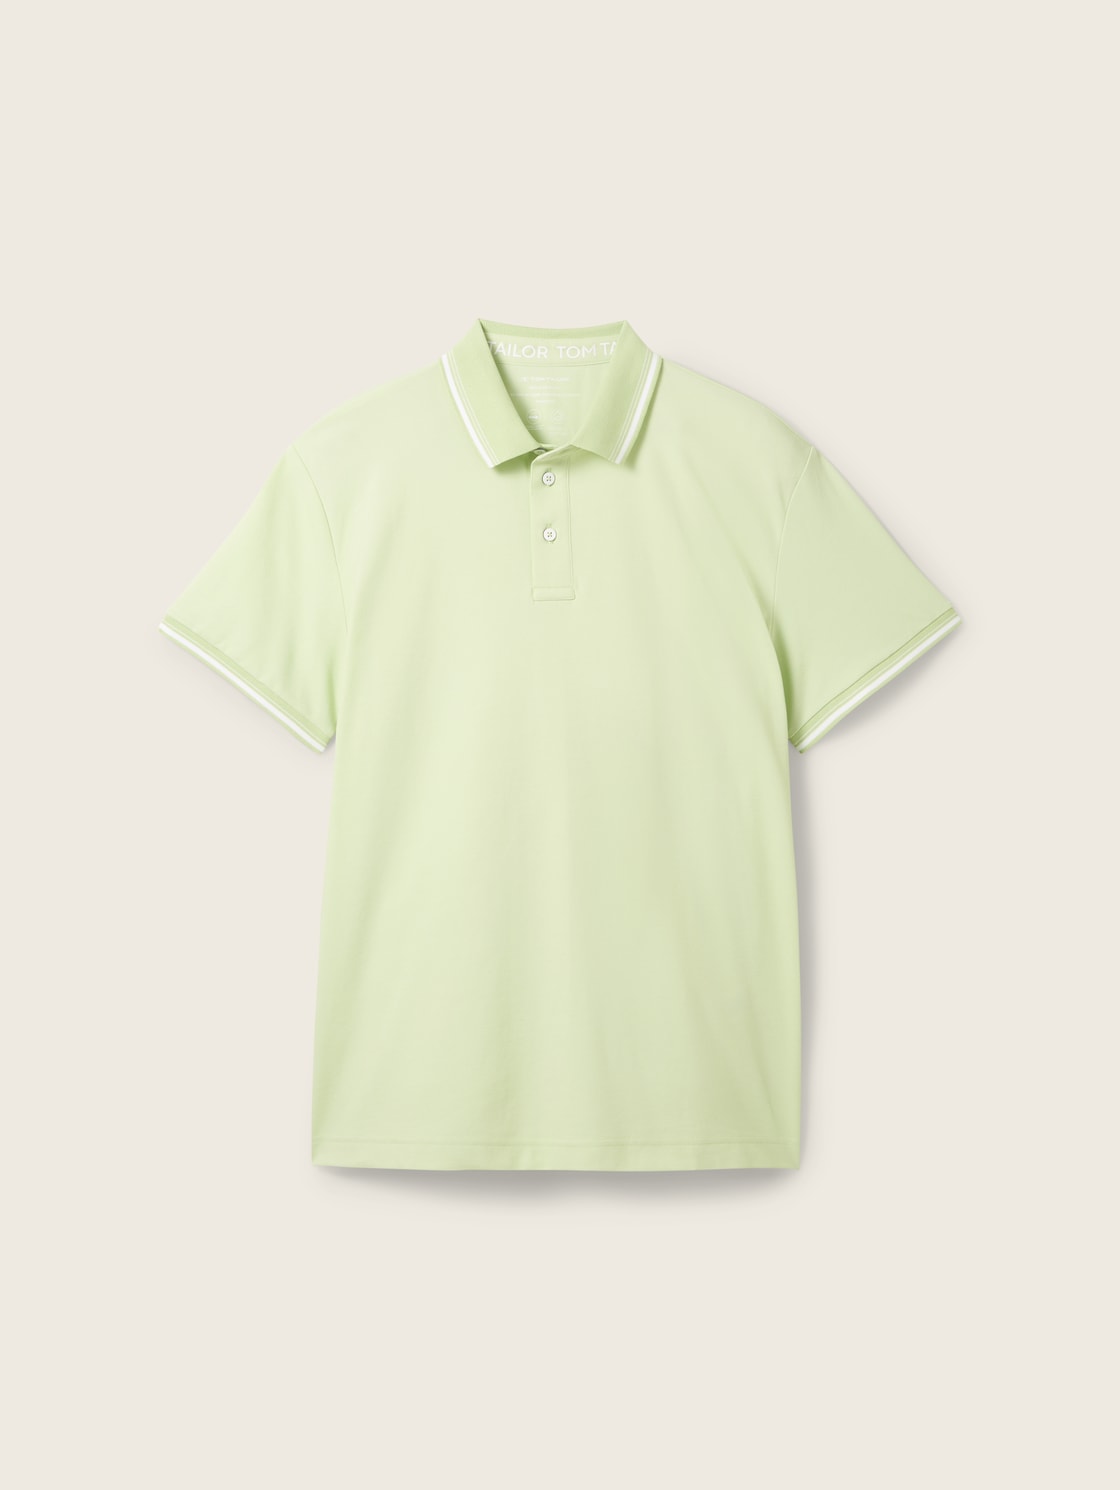 TOM TAILOR Herren COOLMAX® Poloshirt, grün, Uni, Gr. L von Tom Tailor